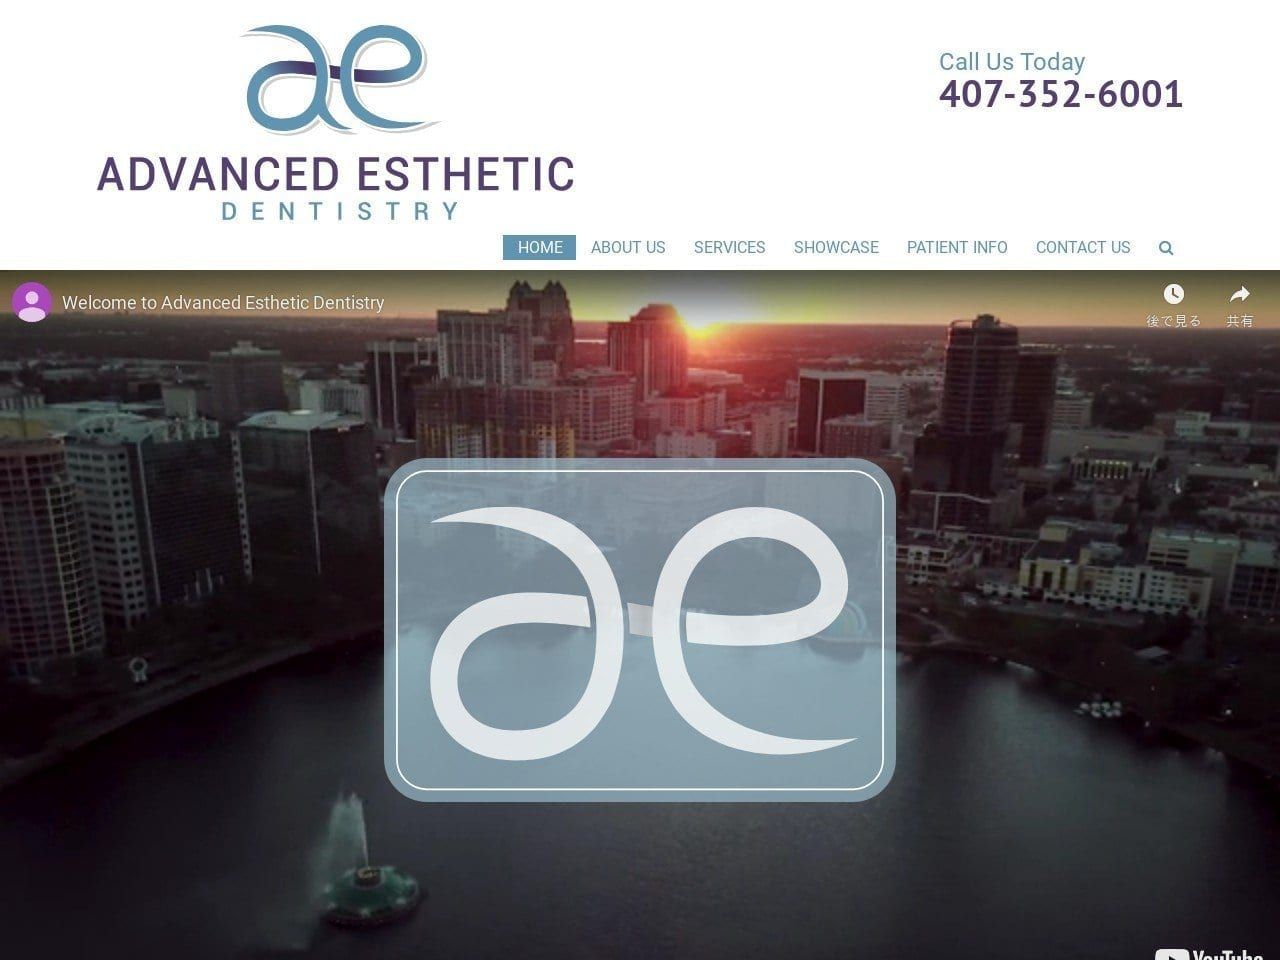 Advanced Esthetic Dentist Website Screenshot from advancedestheticdentistry.com